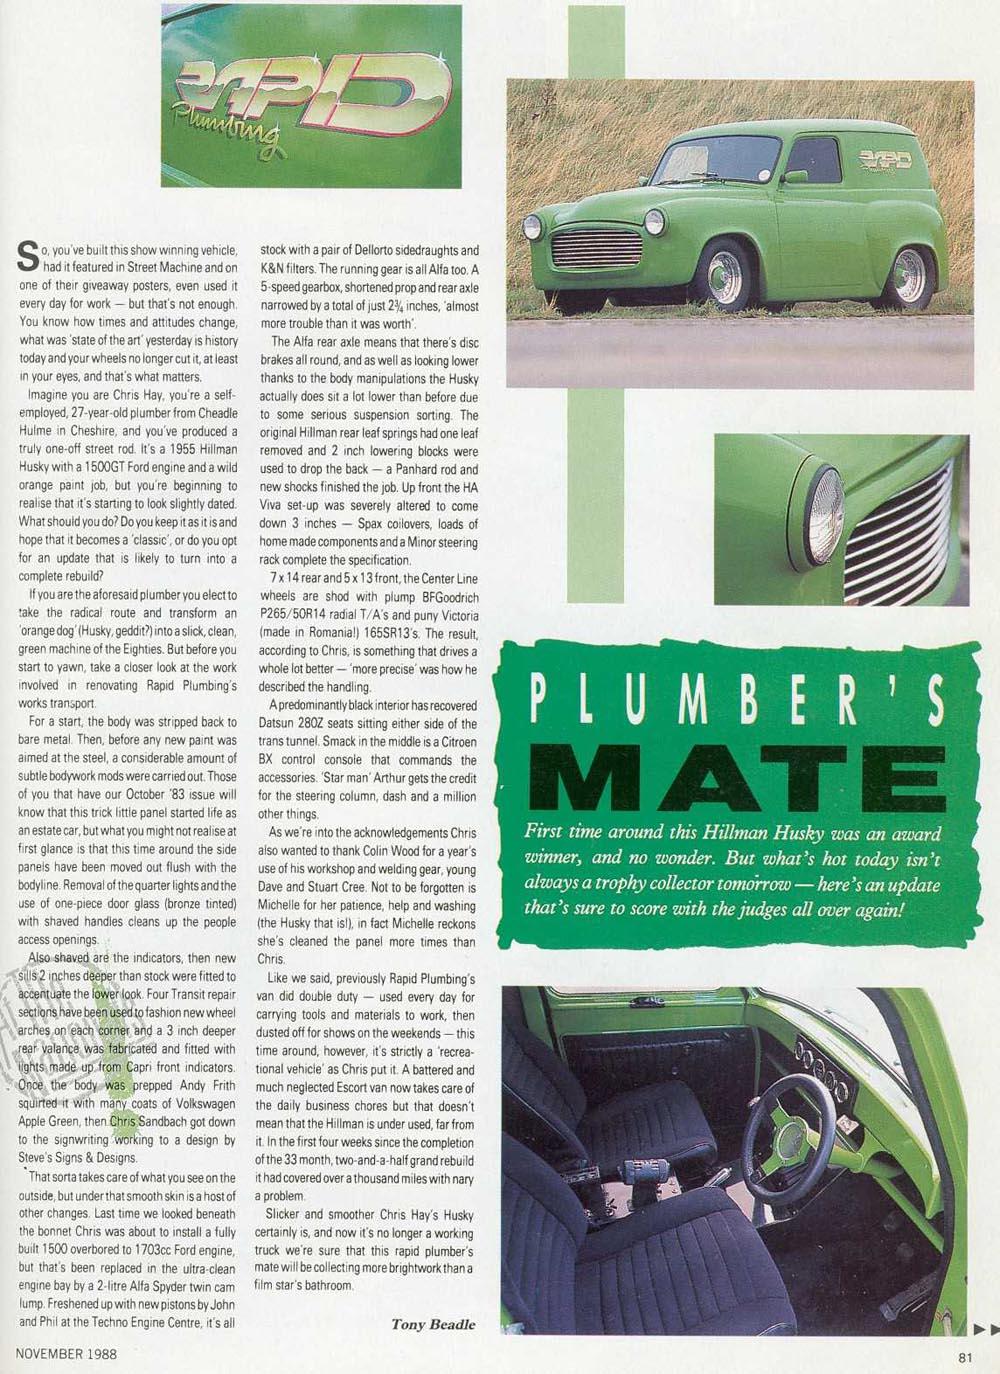 Rapid Plumbing Hillman Husky Van Street Machine Magazine Article Page 1